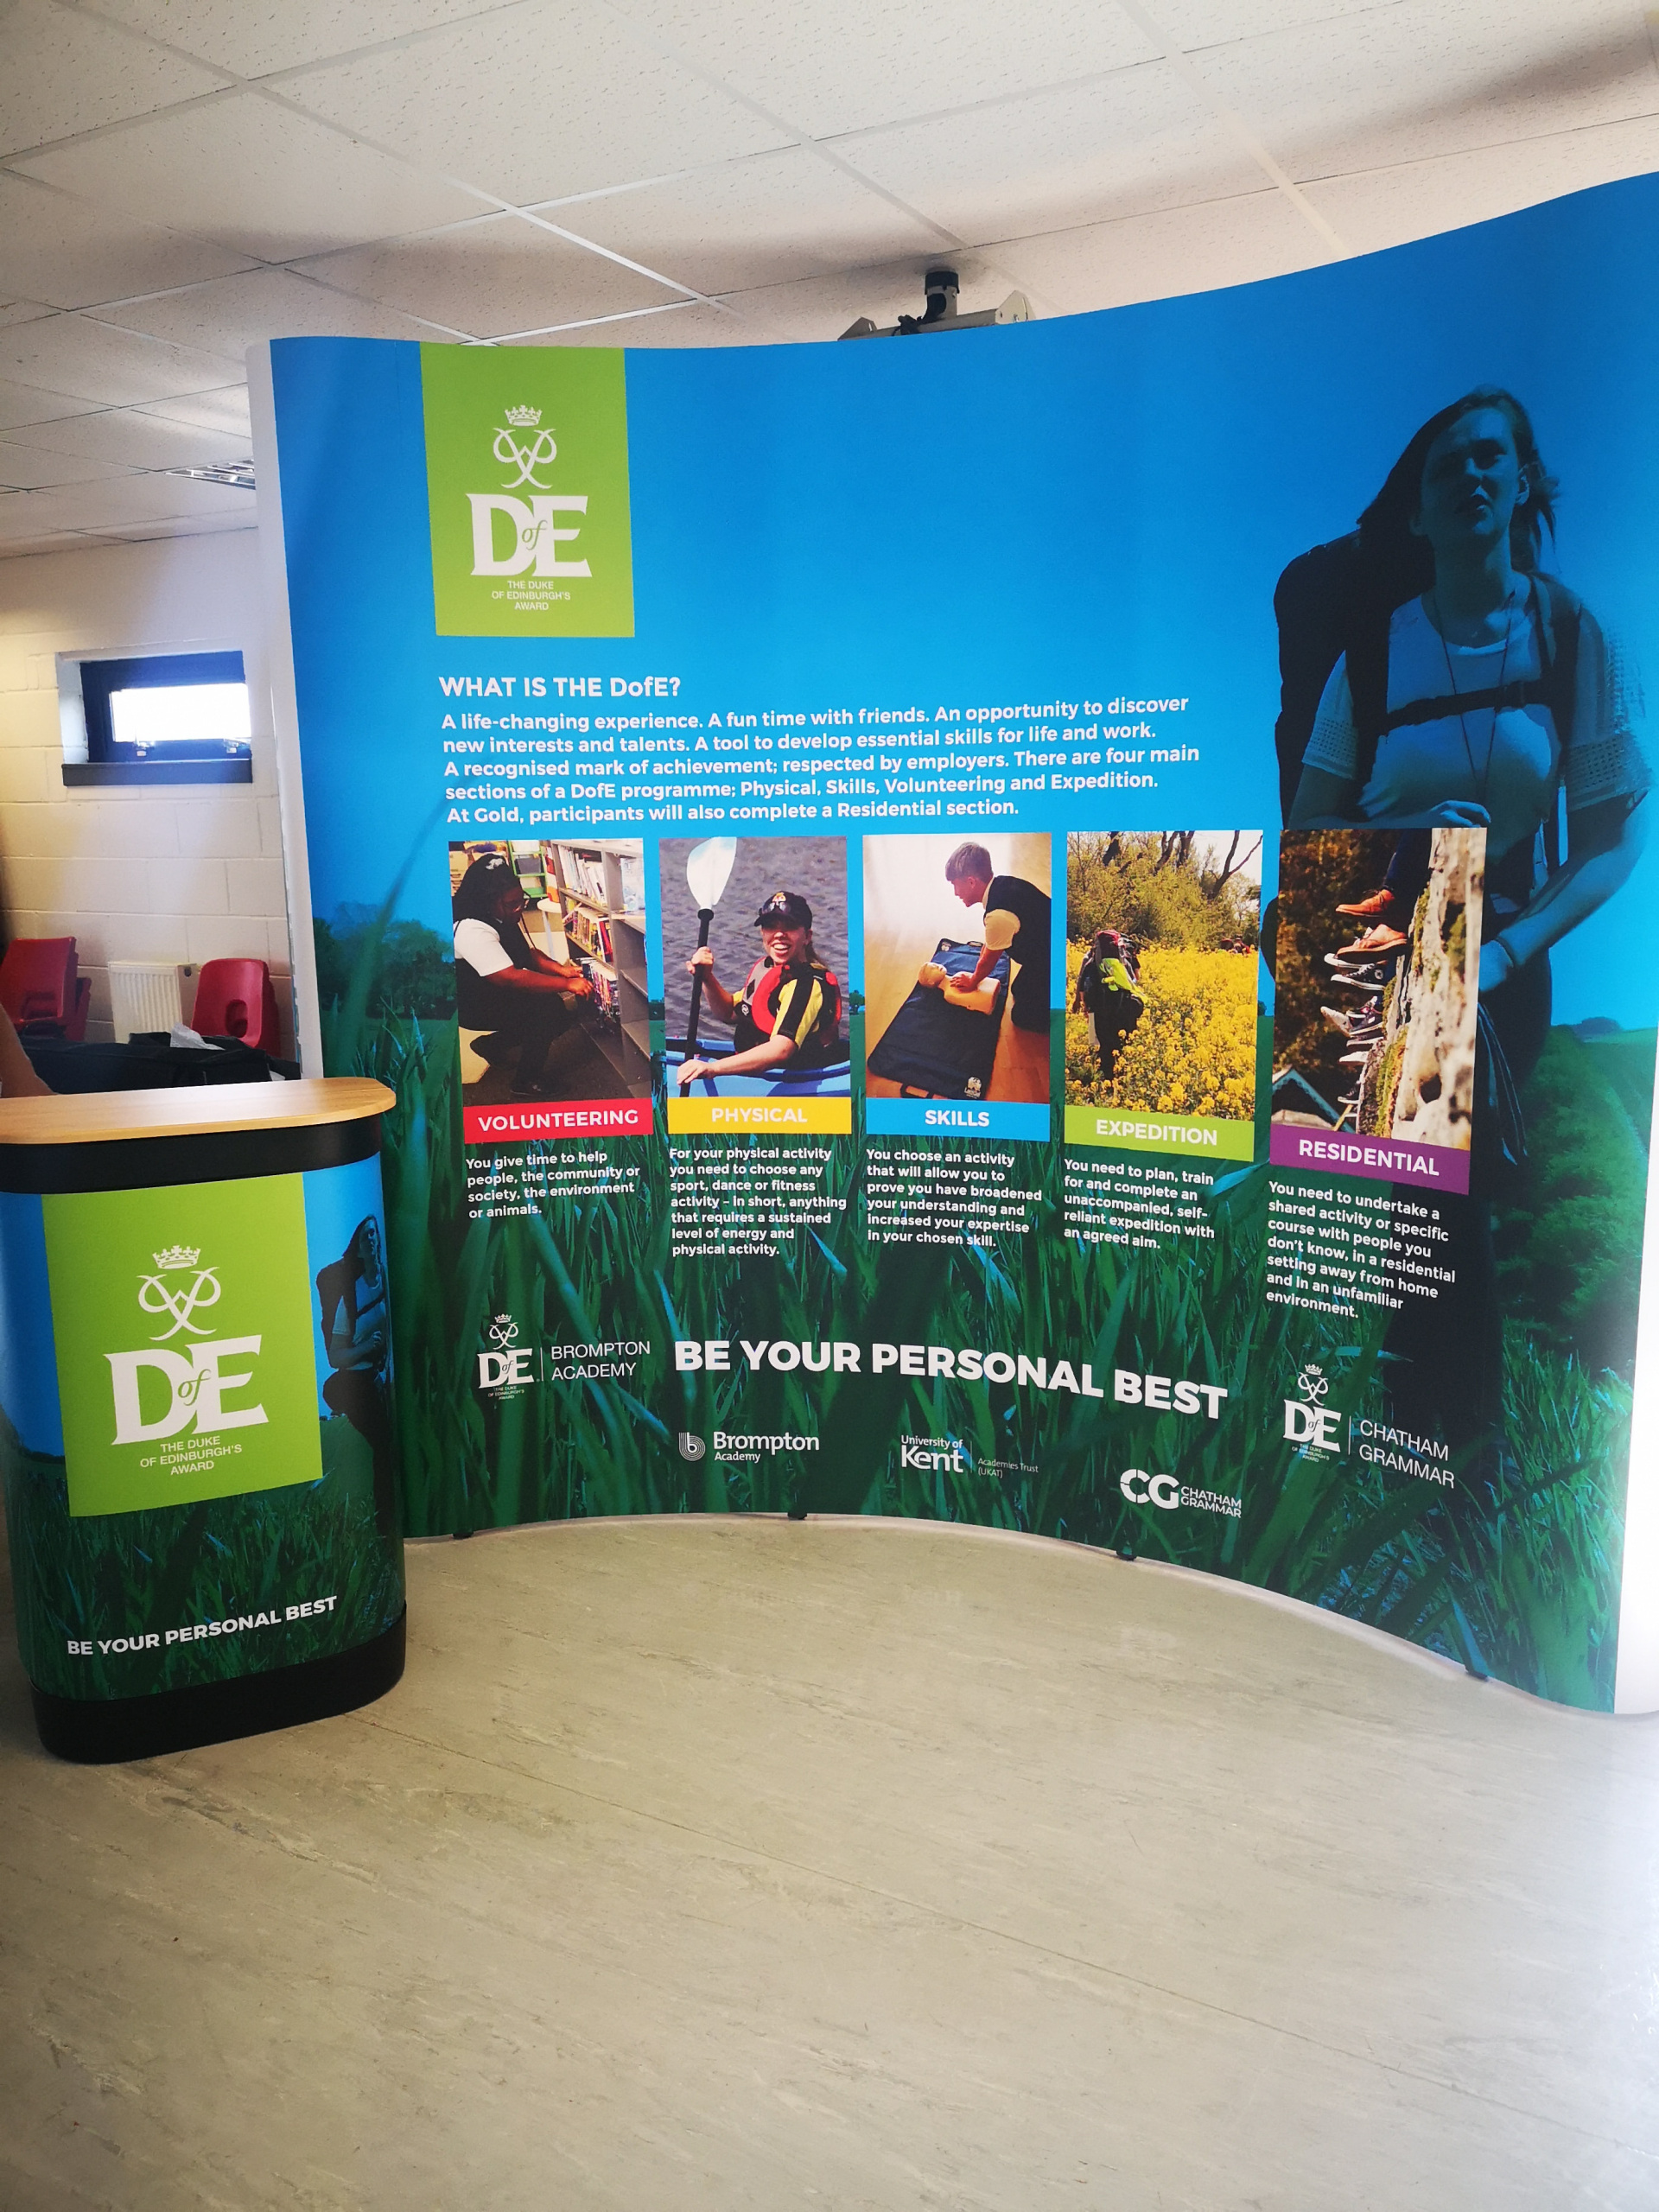 DofE Up Banner with bespoke design for schools